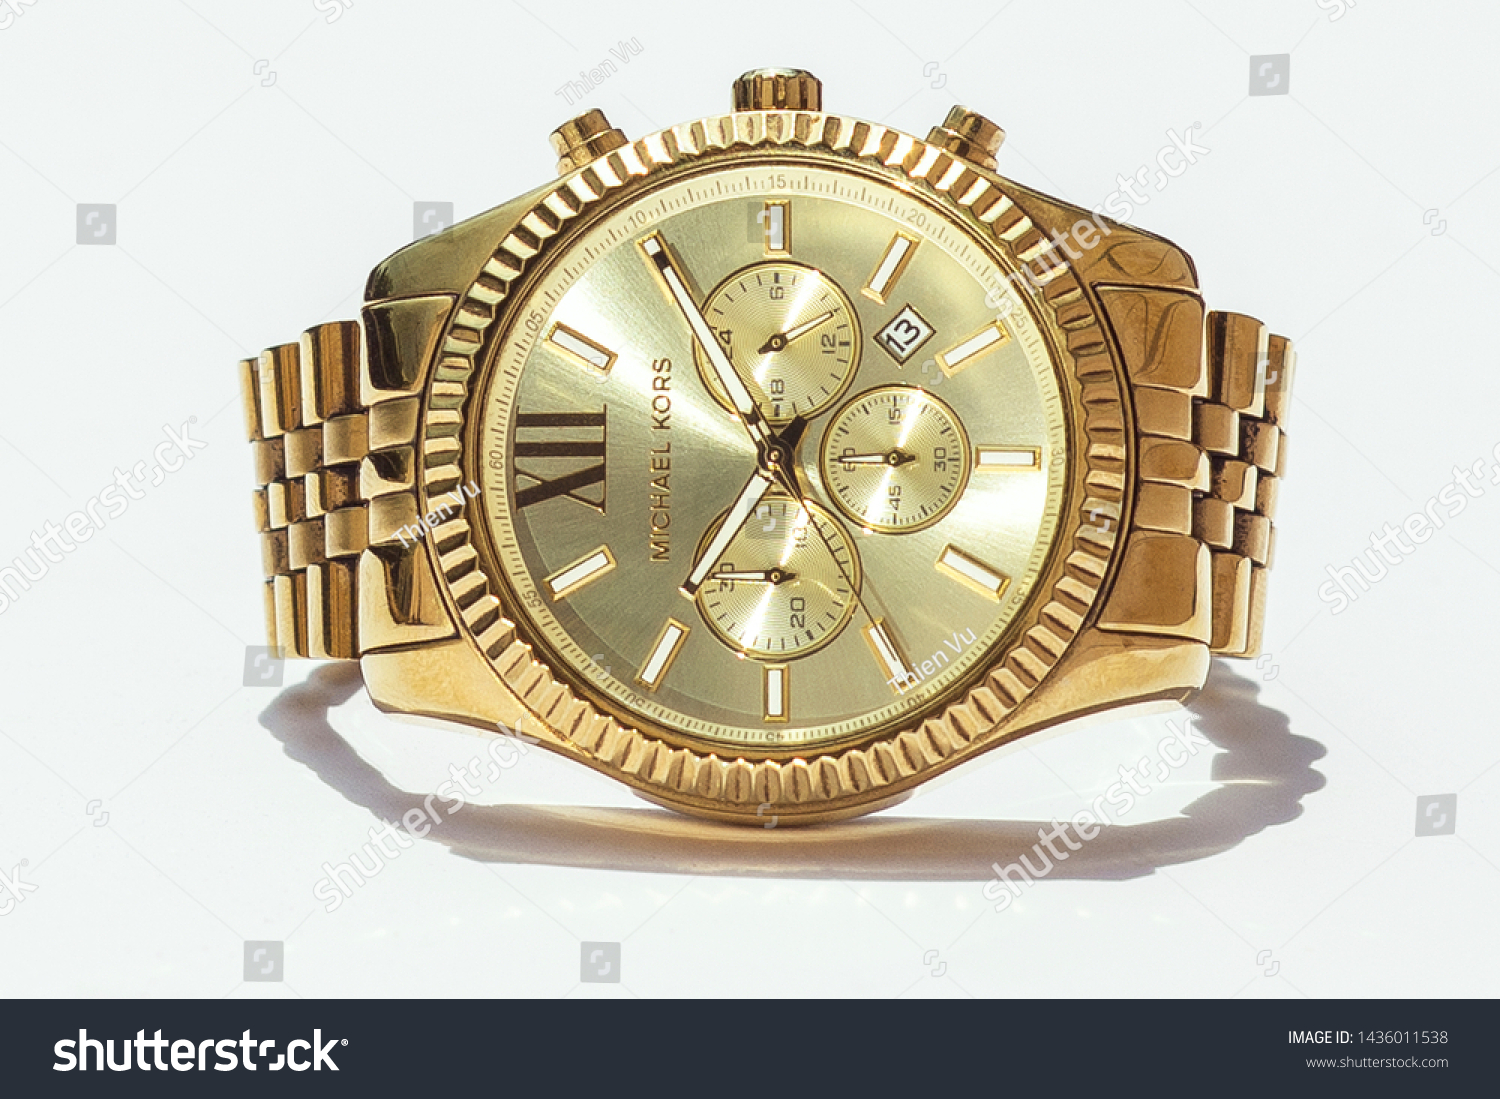 Kors Watches Beautiful Watch Brand Stock Photo (Edit 1436011538